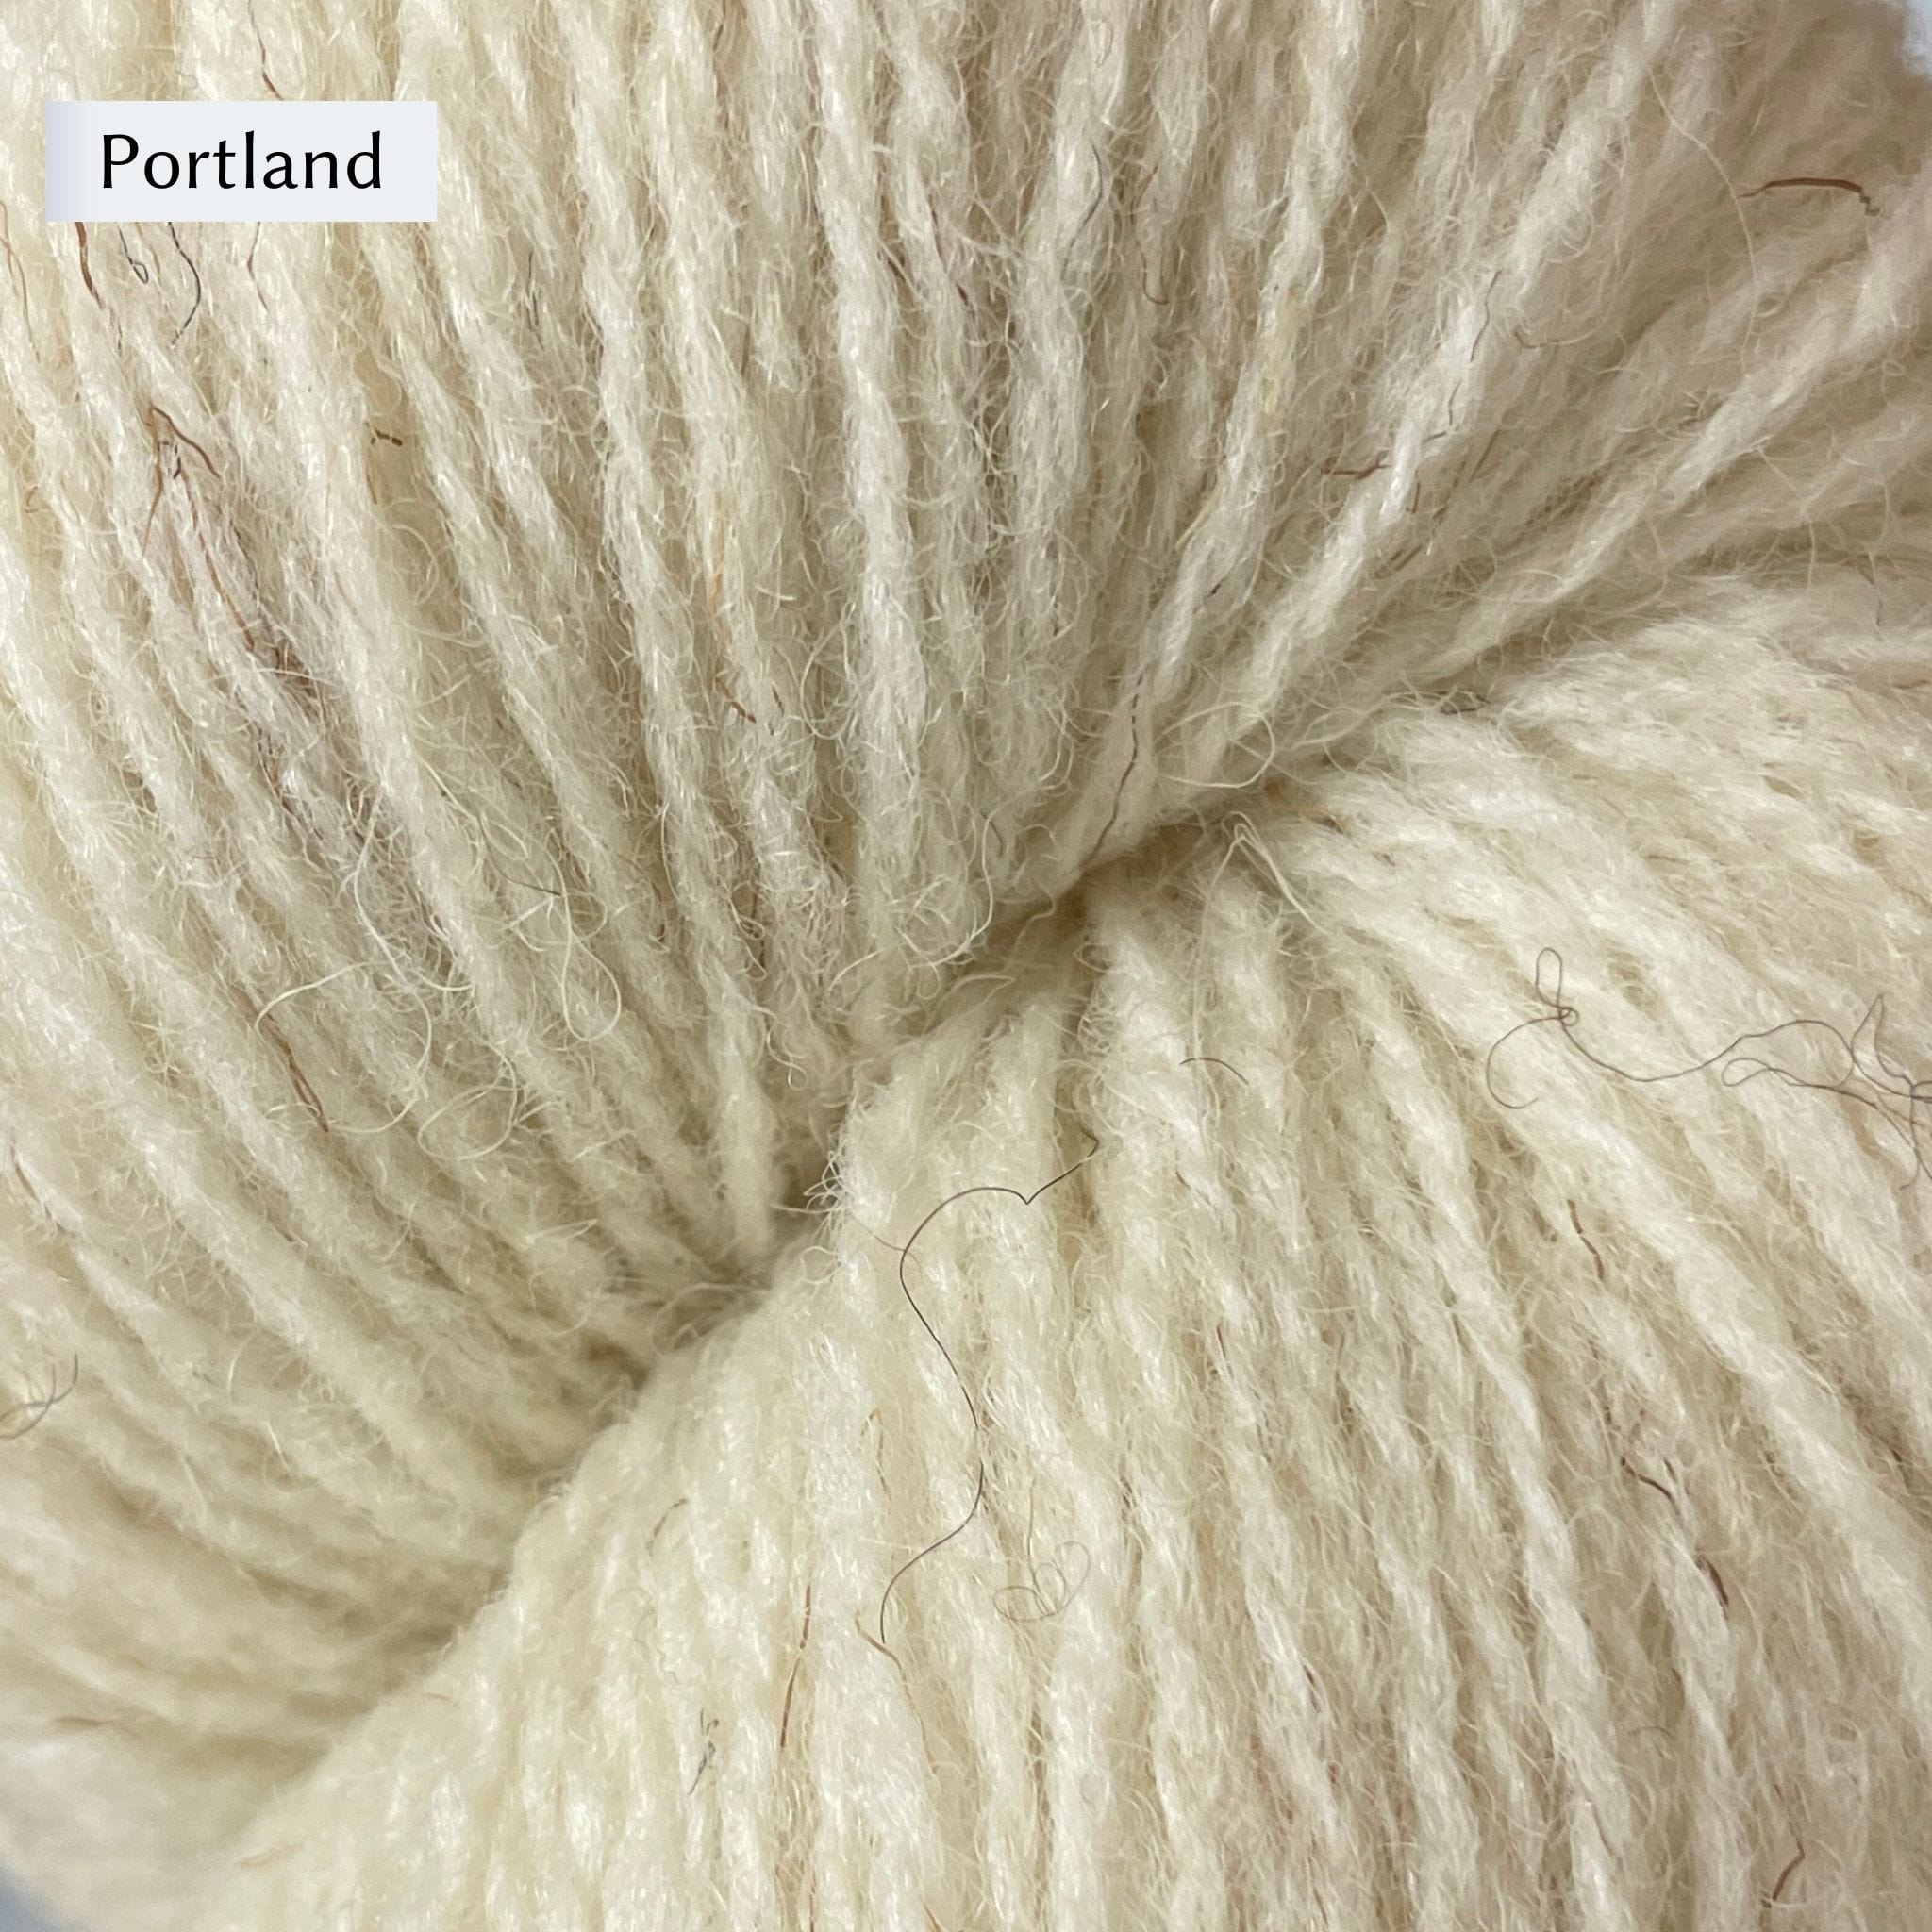 Undyed Wool/Nylon Blend Yarn